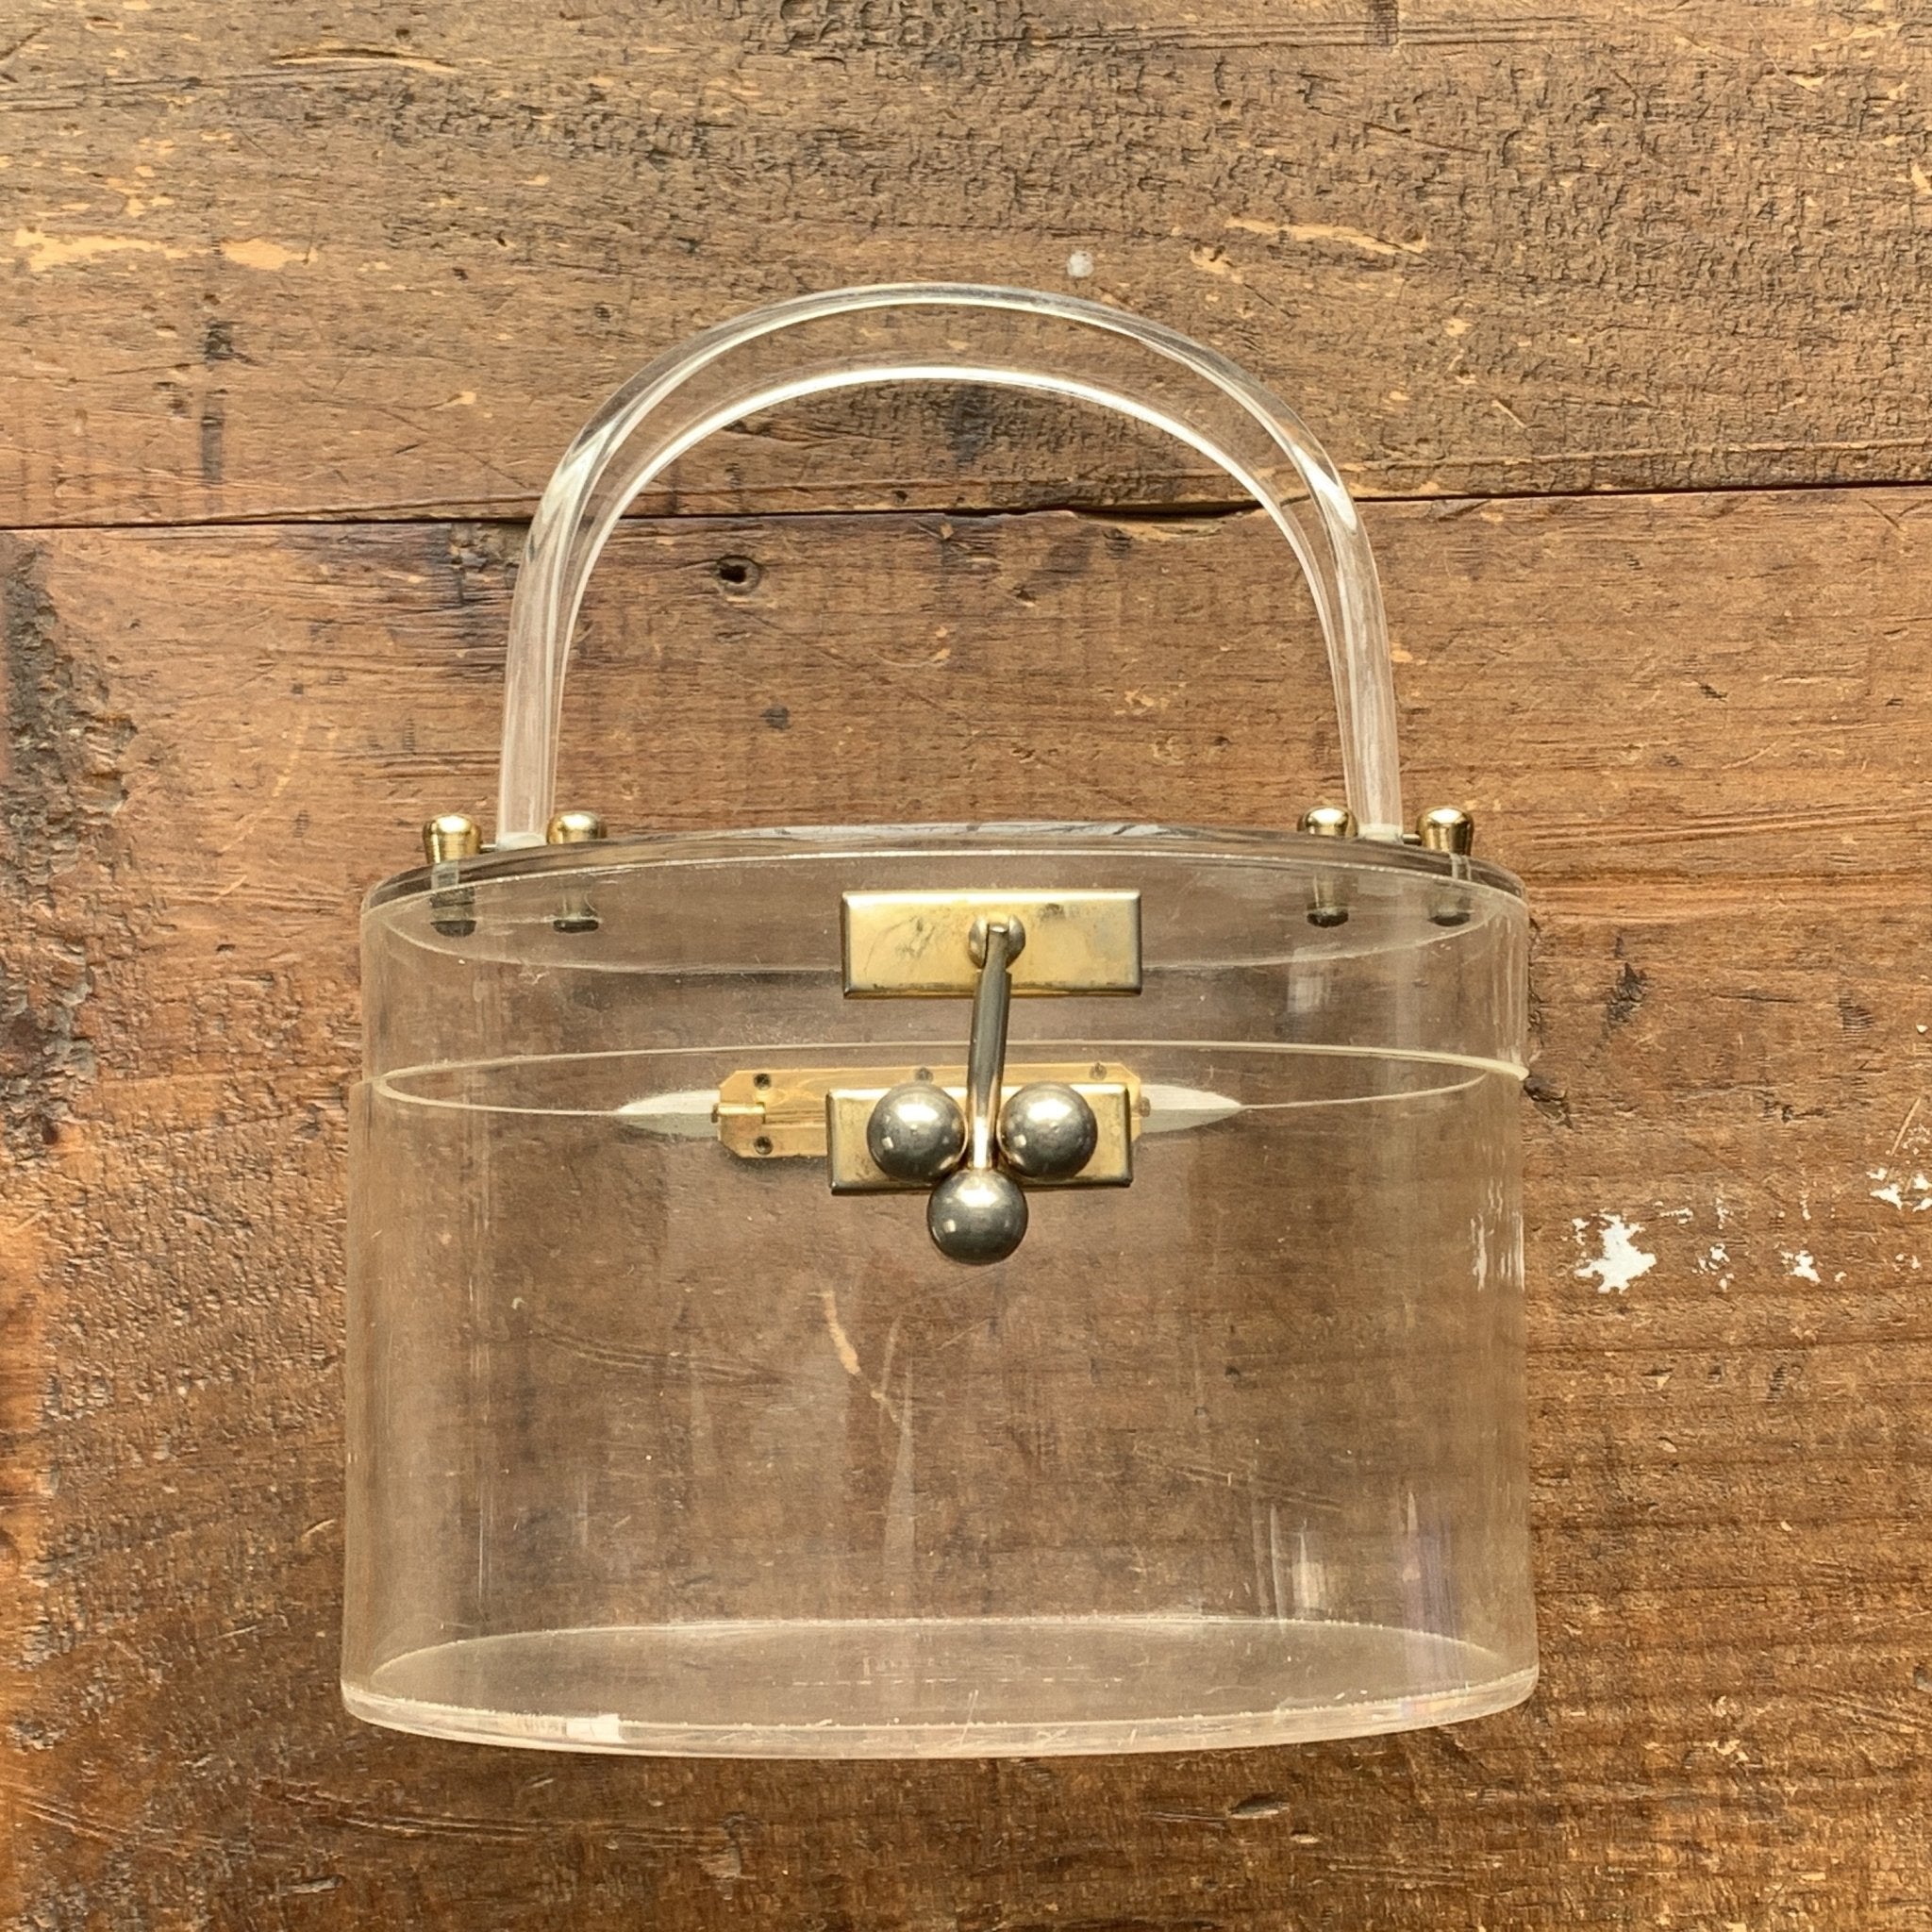 Sold at Auction: Lot of 3 Vintage Lucite Handbag Purses.